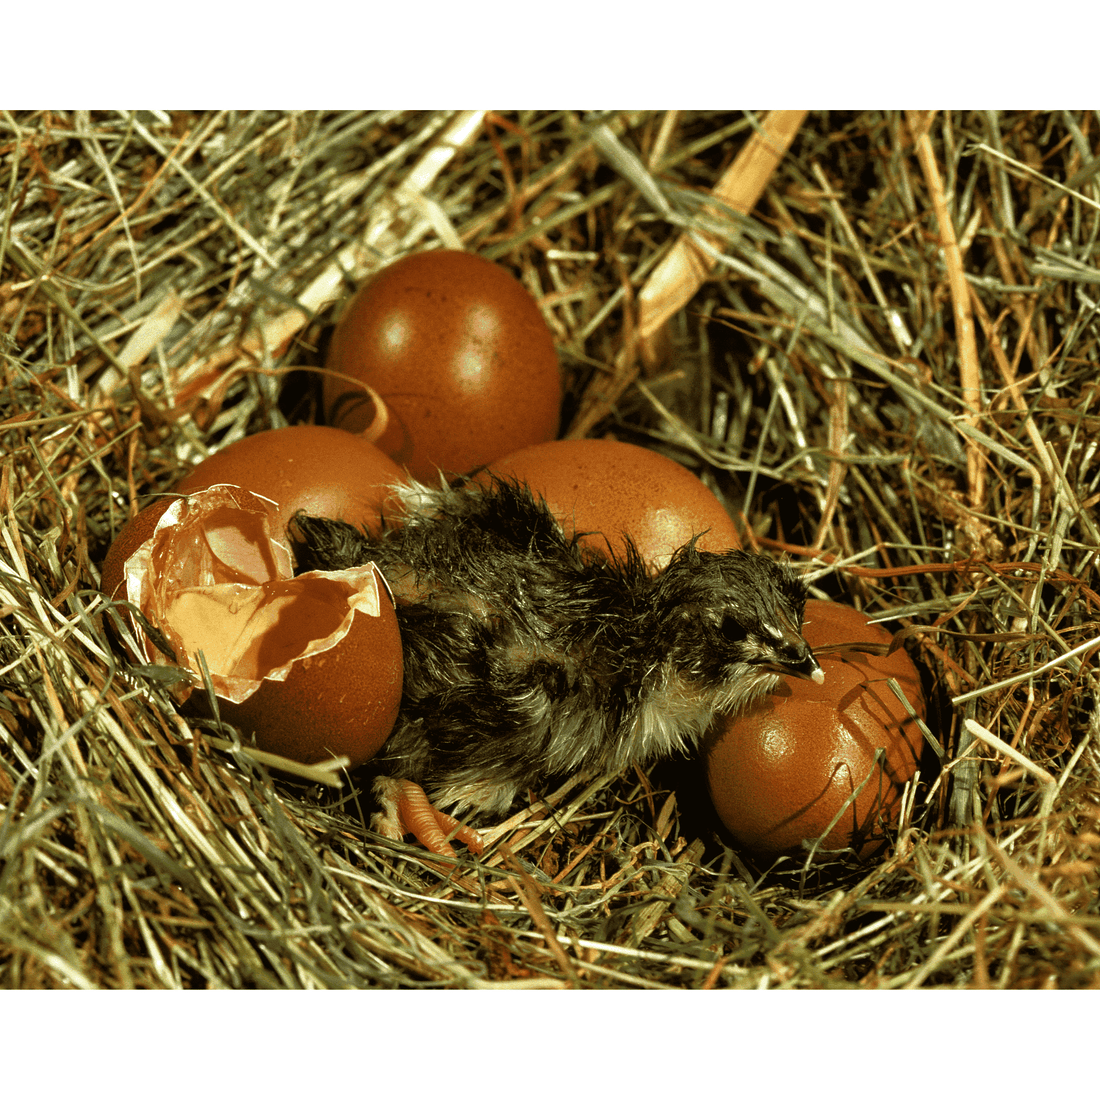 Barred Rock Chicken Hatching Eggs - 1 Dozen - White's Family Farmhouse 